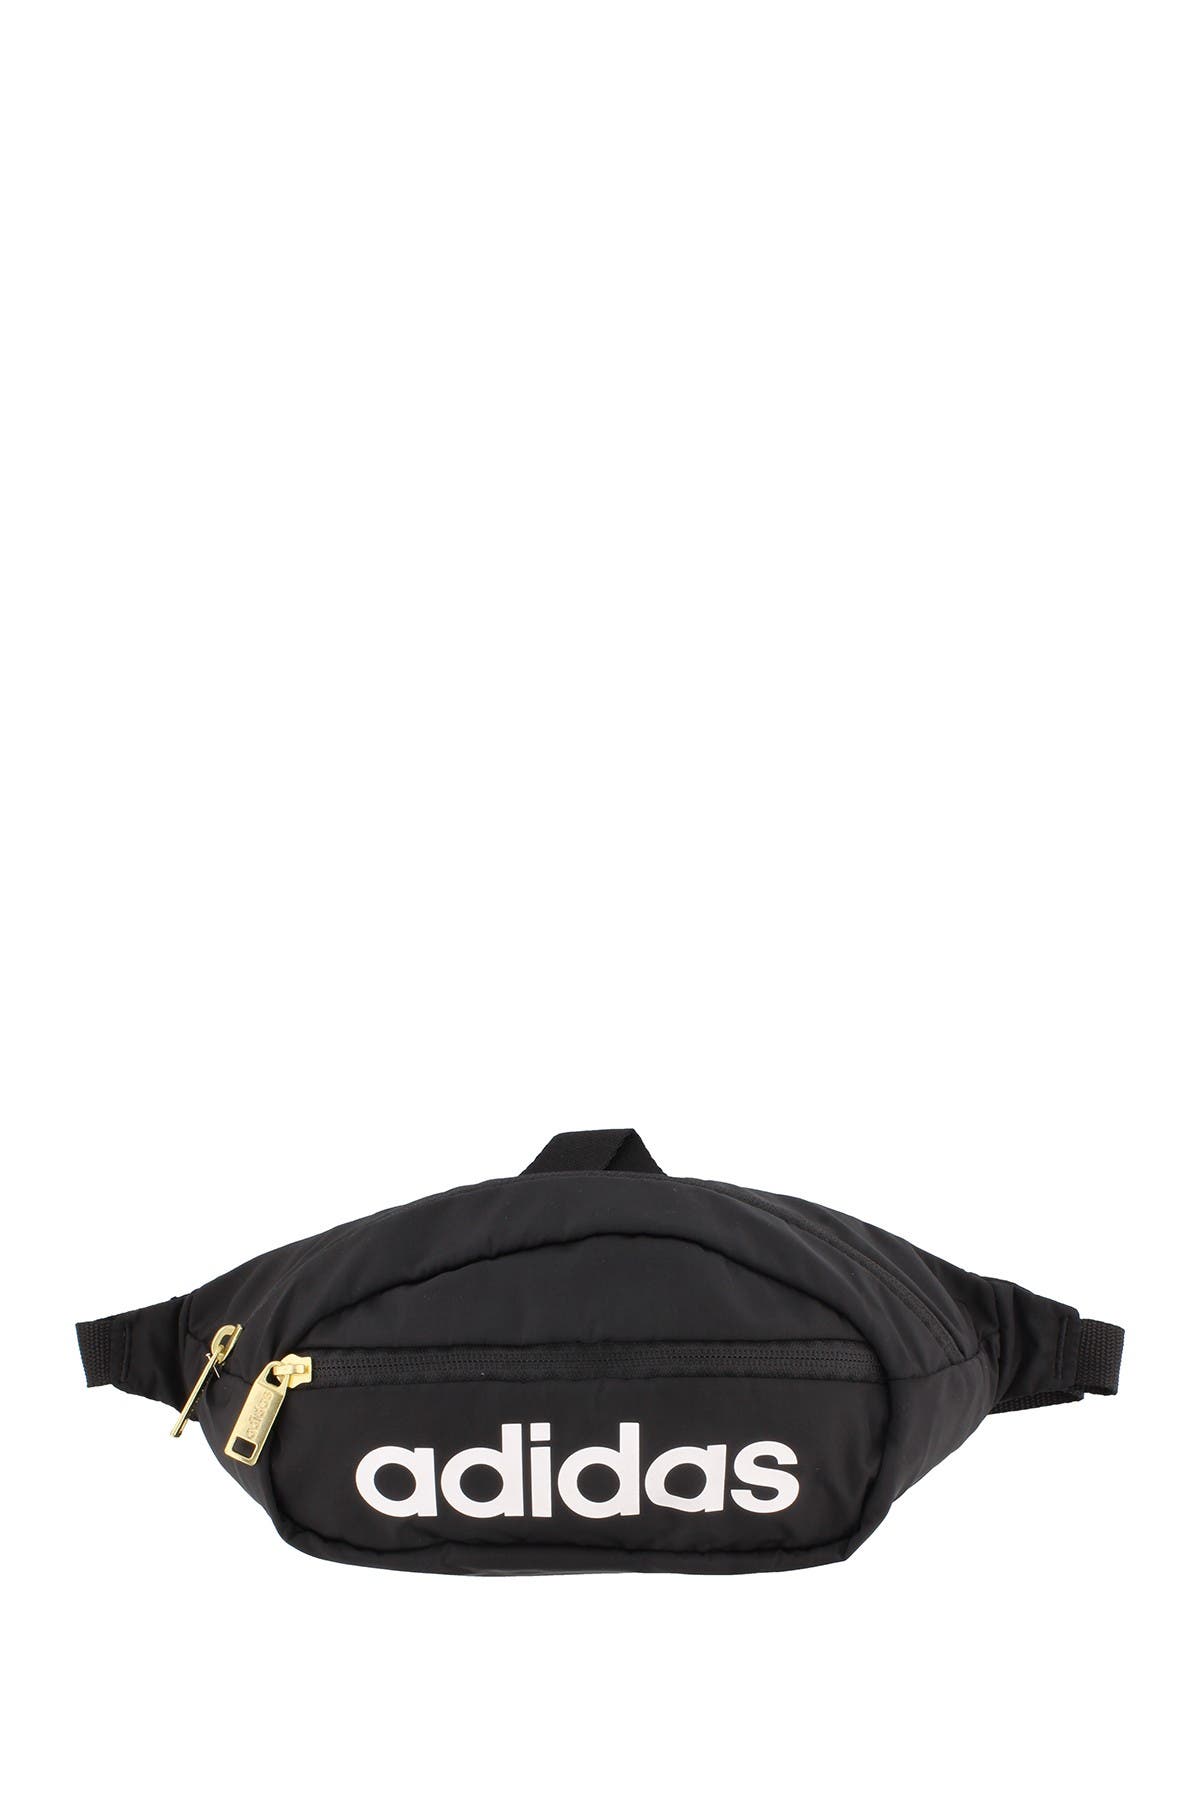 Adidas Originals Core Waist Pack In Black